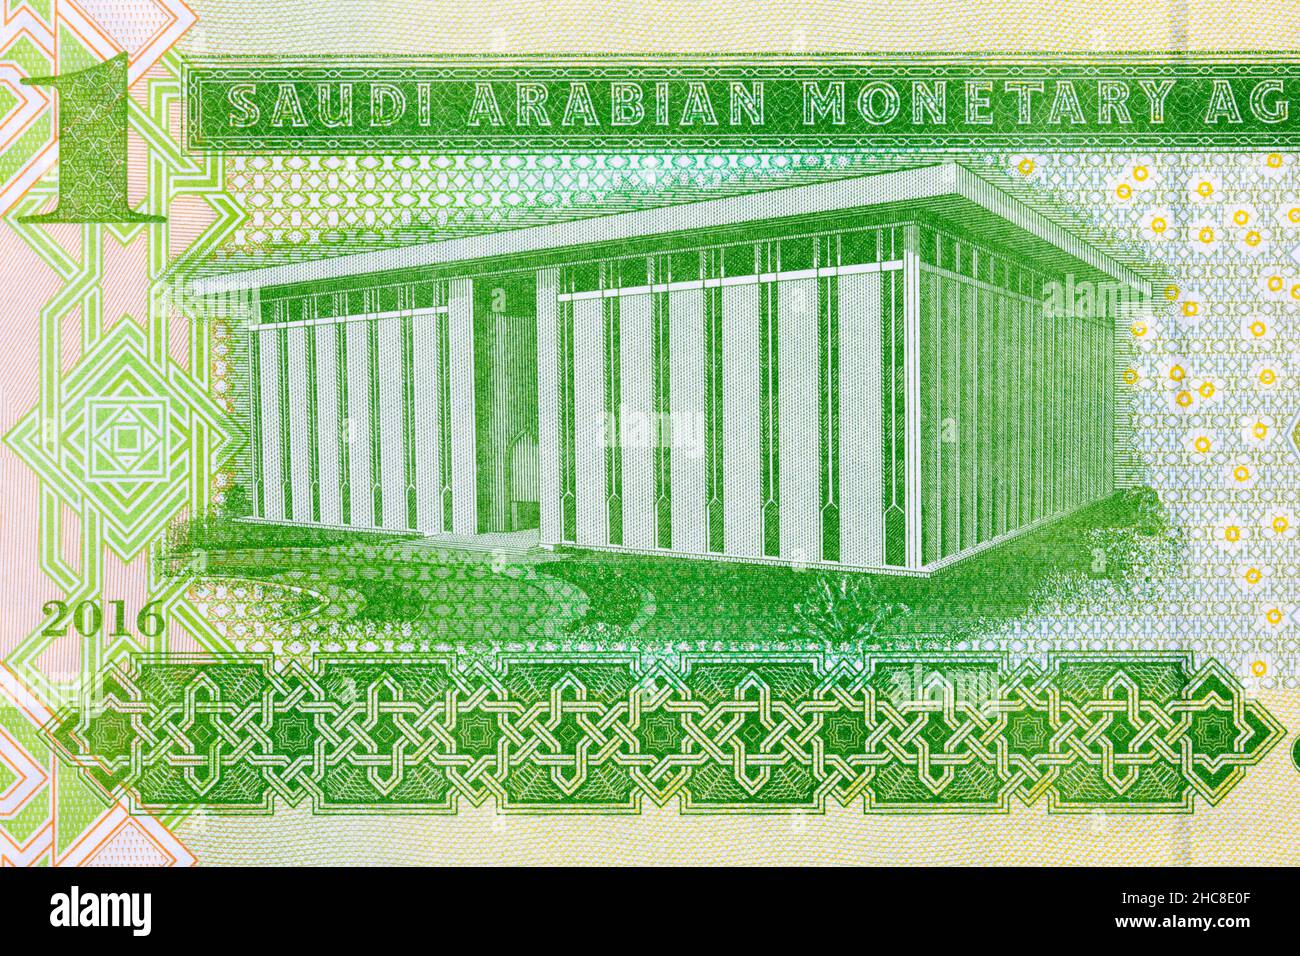 Saudi Arabian Monetary Authority Building from Money - Riyal Stockfoto